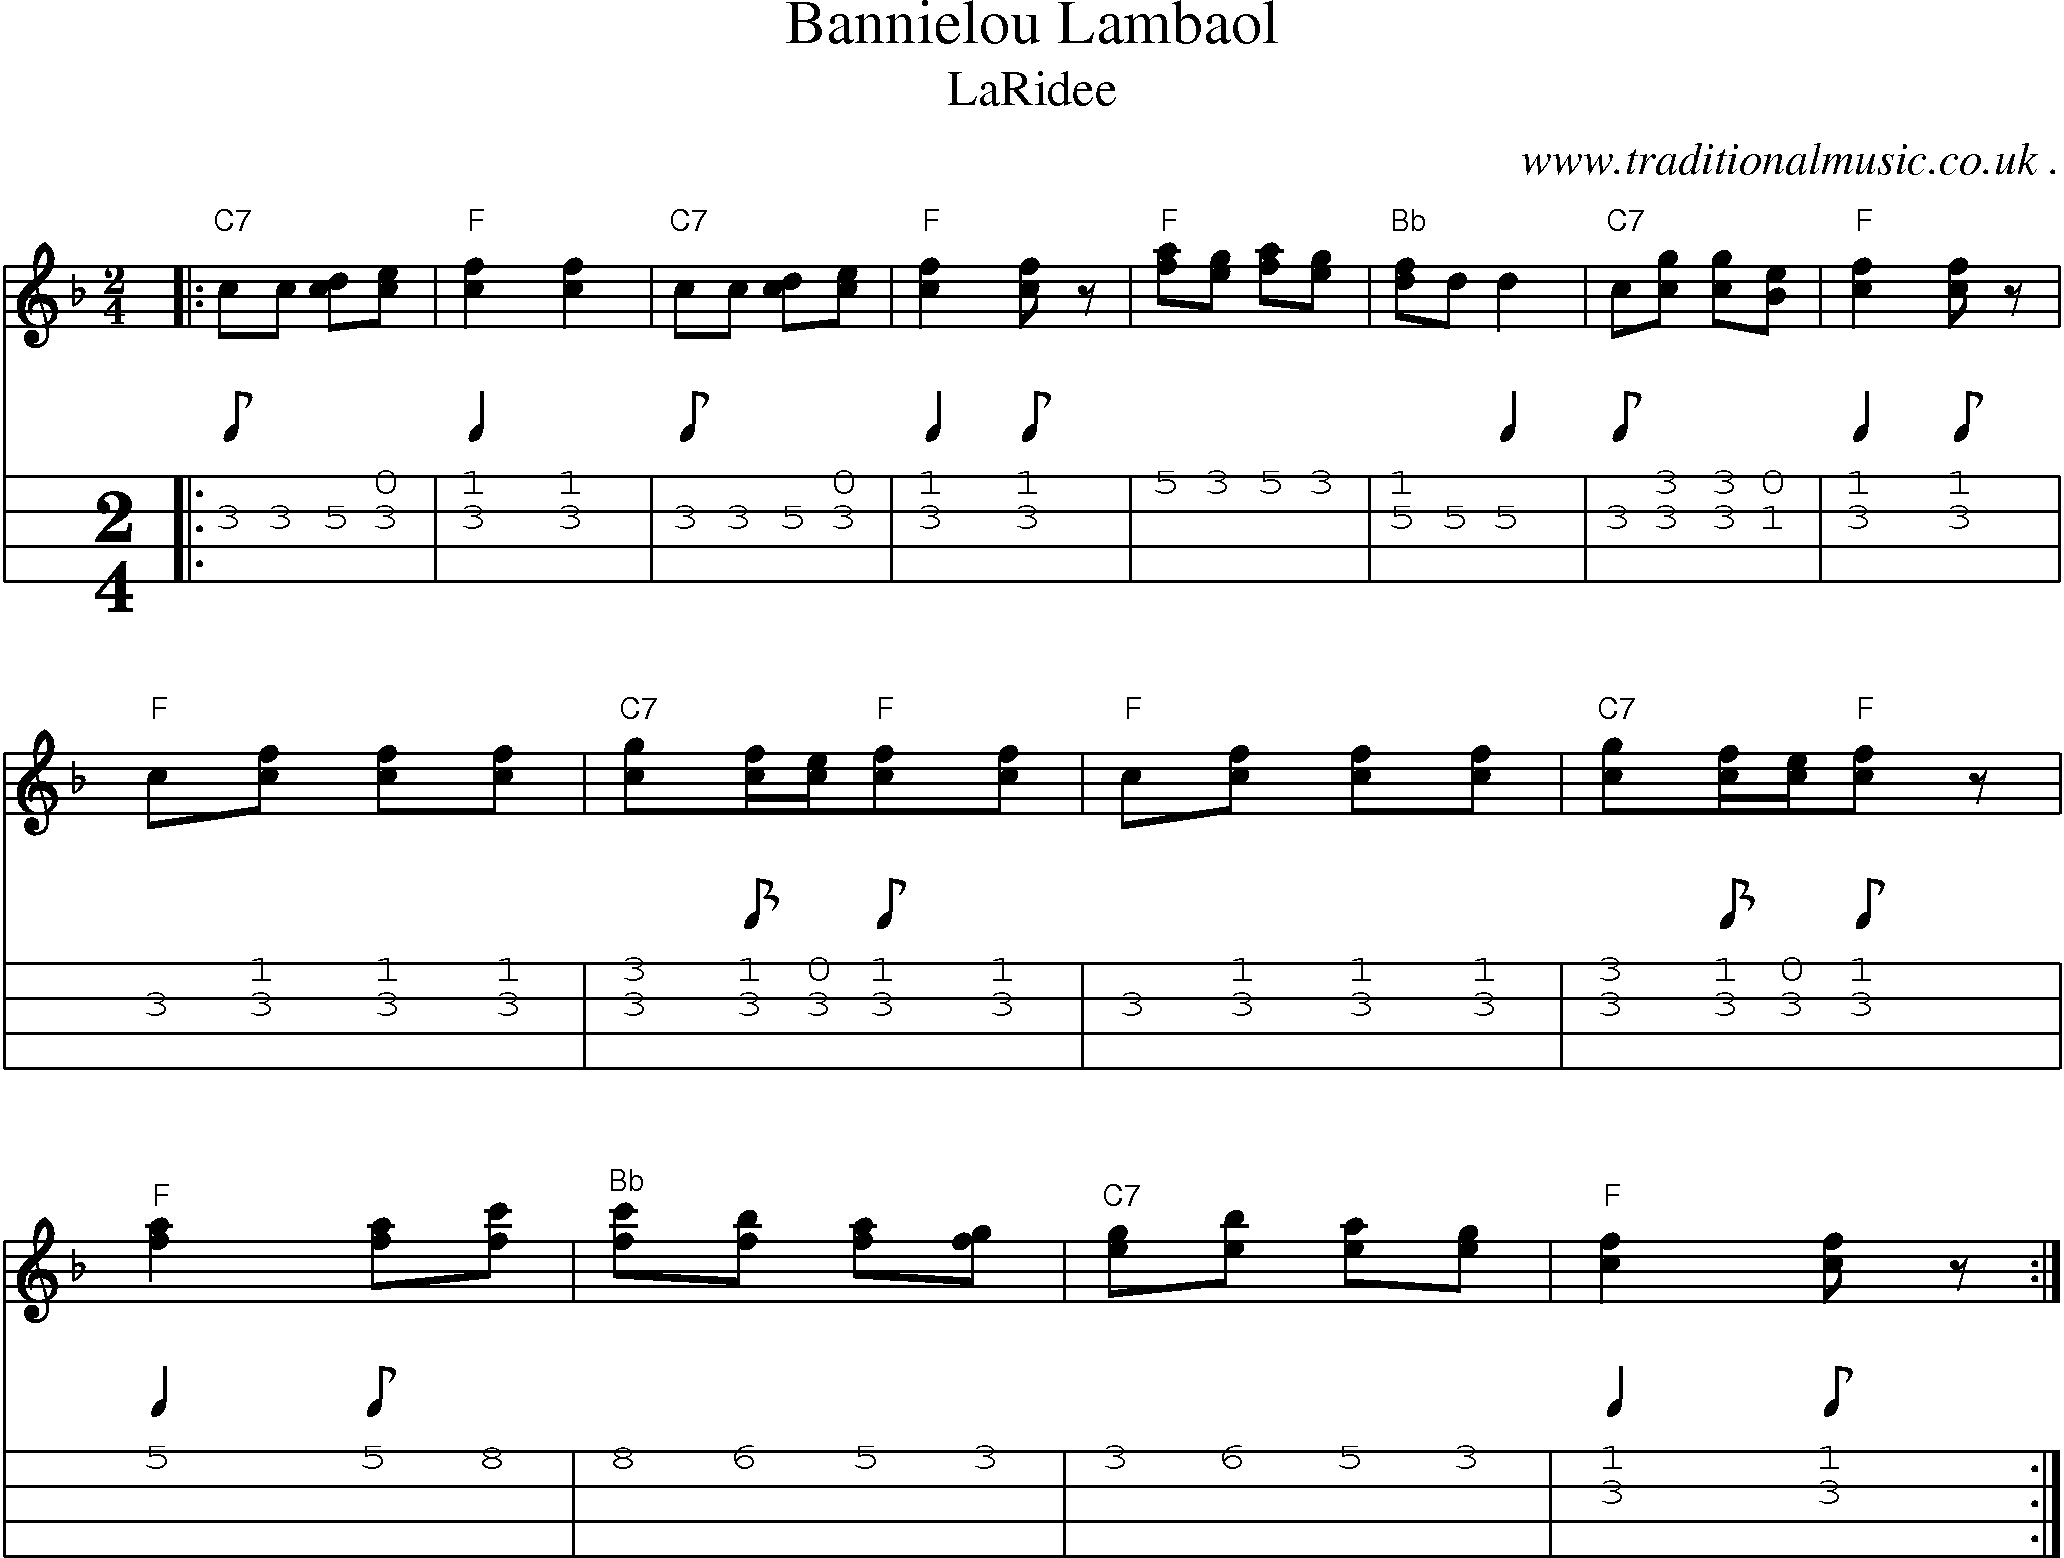 Sheet-Music and Mandolin Tabs for Bannielou Lambaol